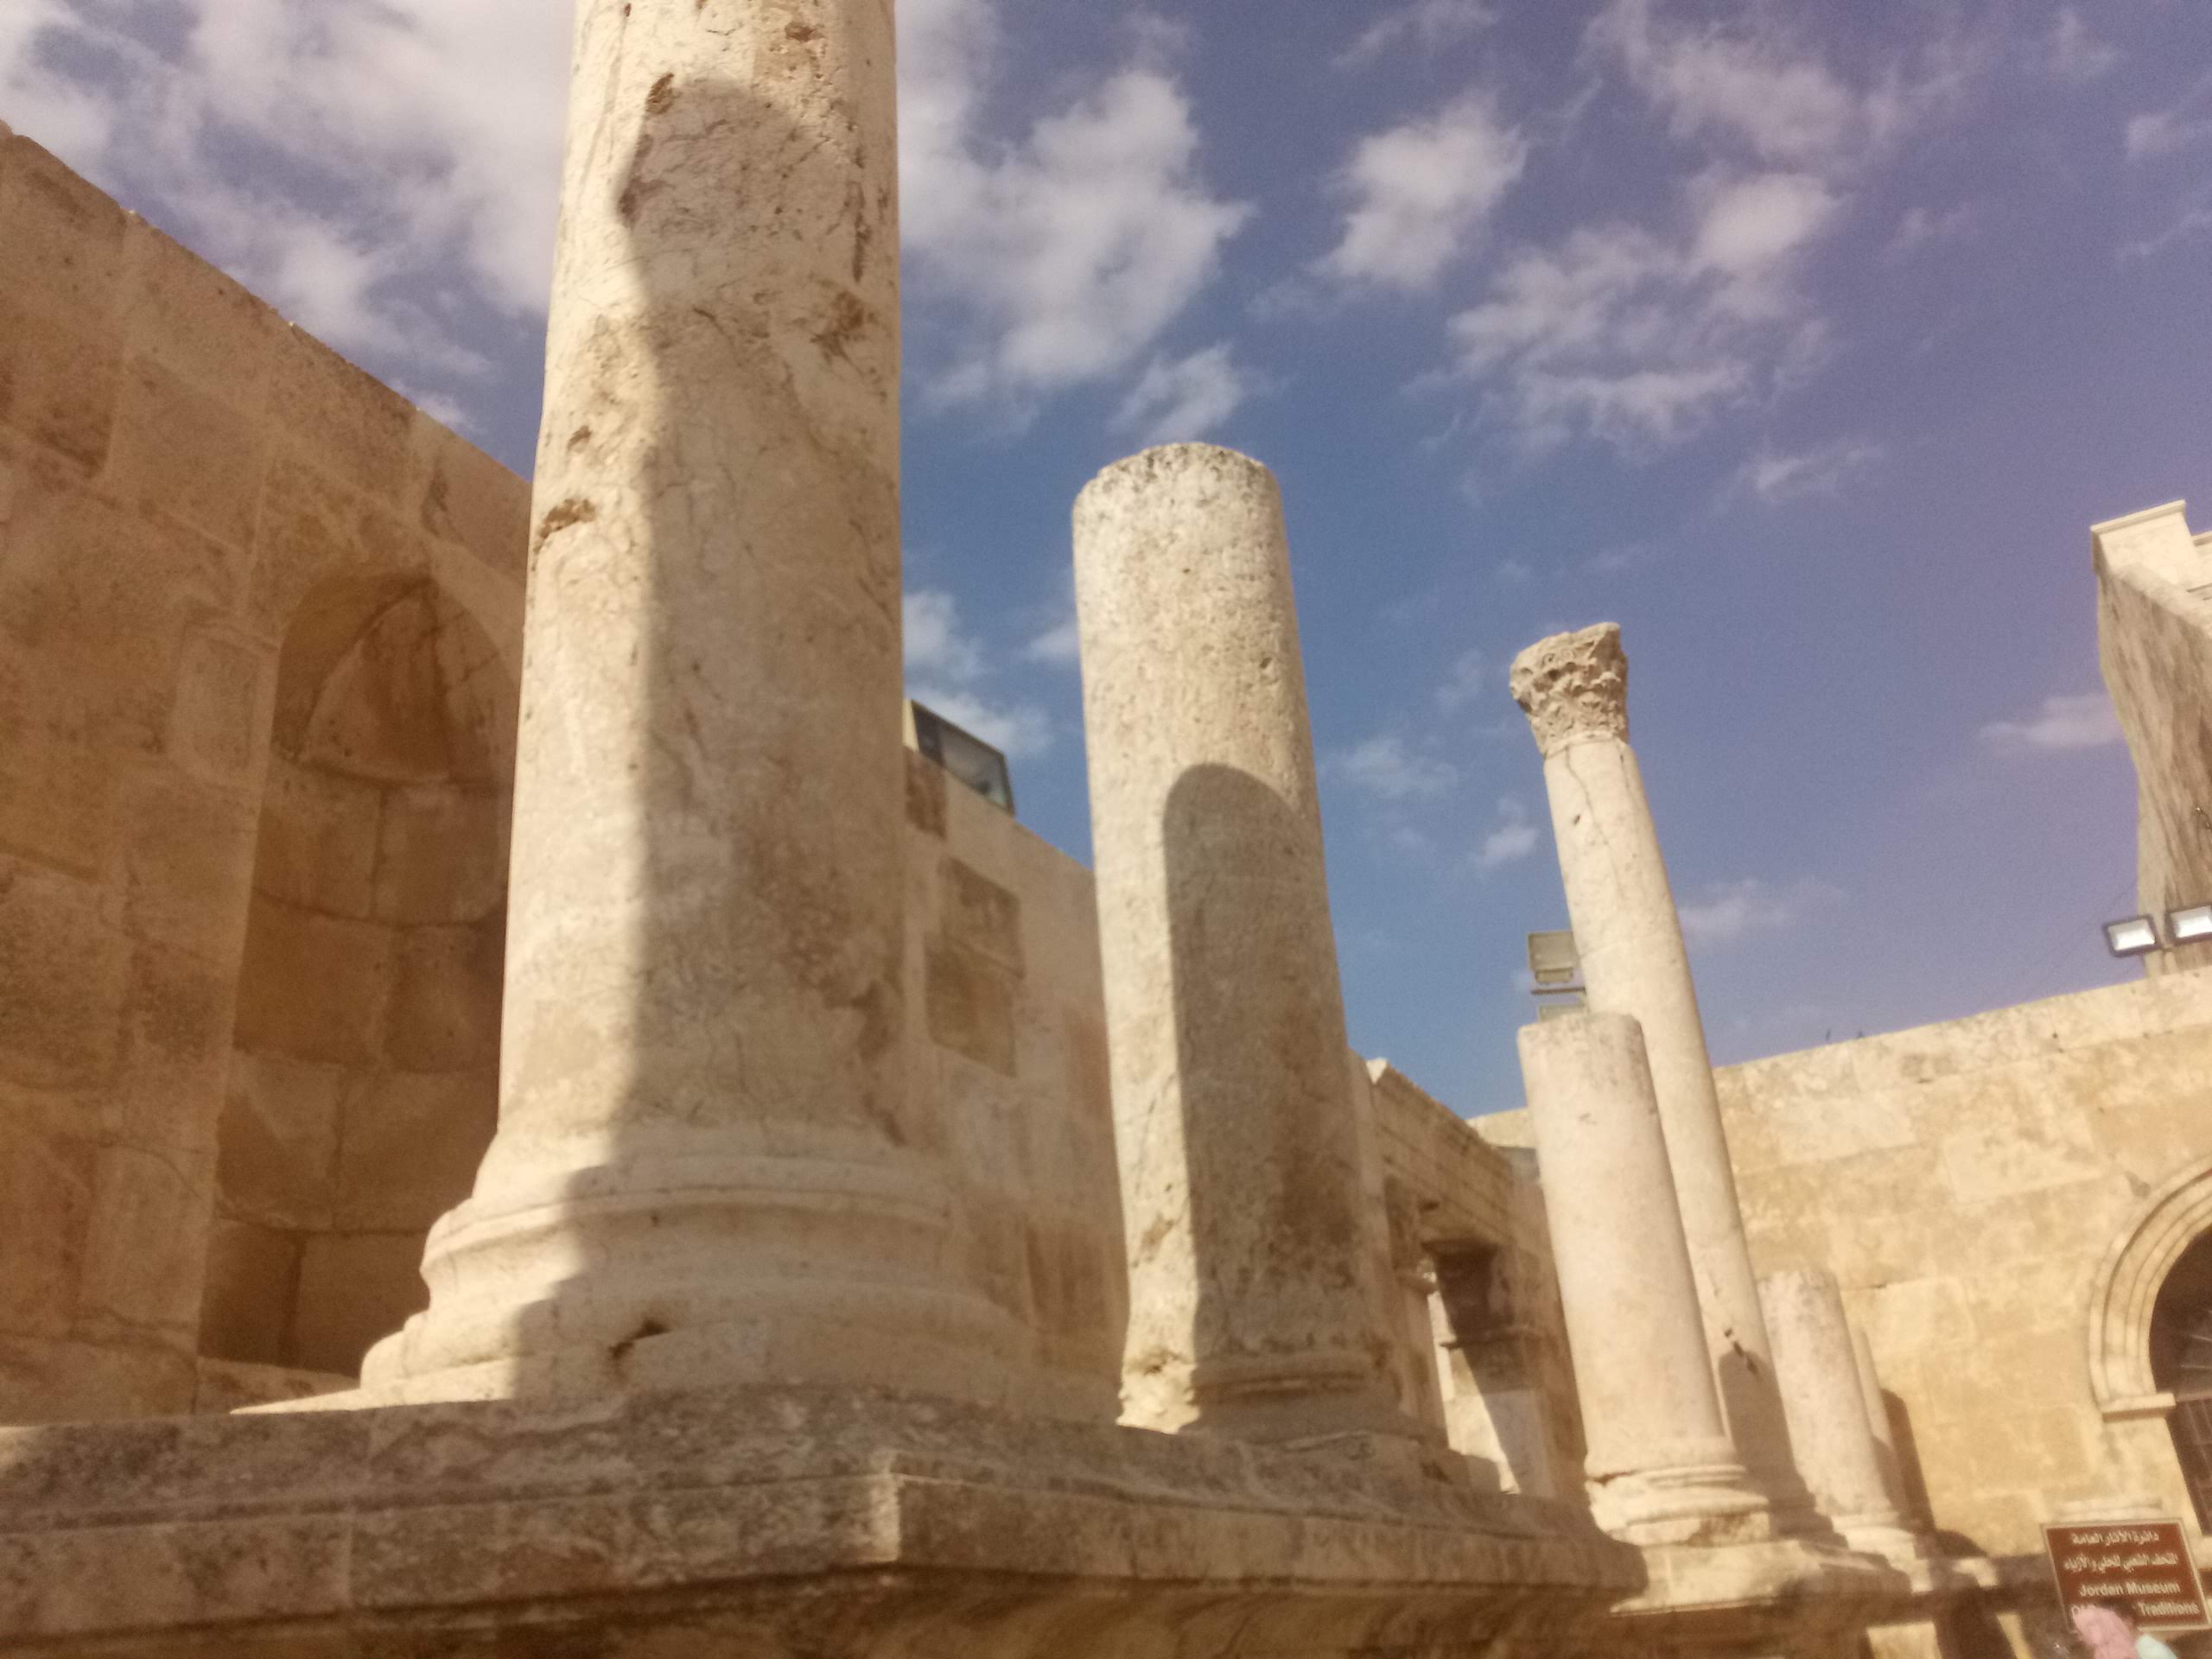 Columns in ruins